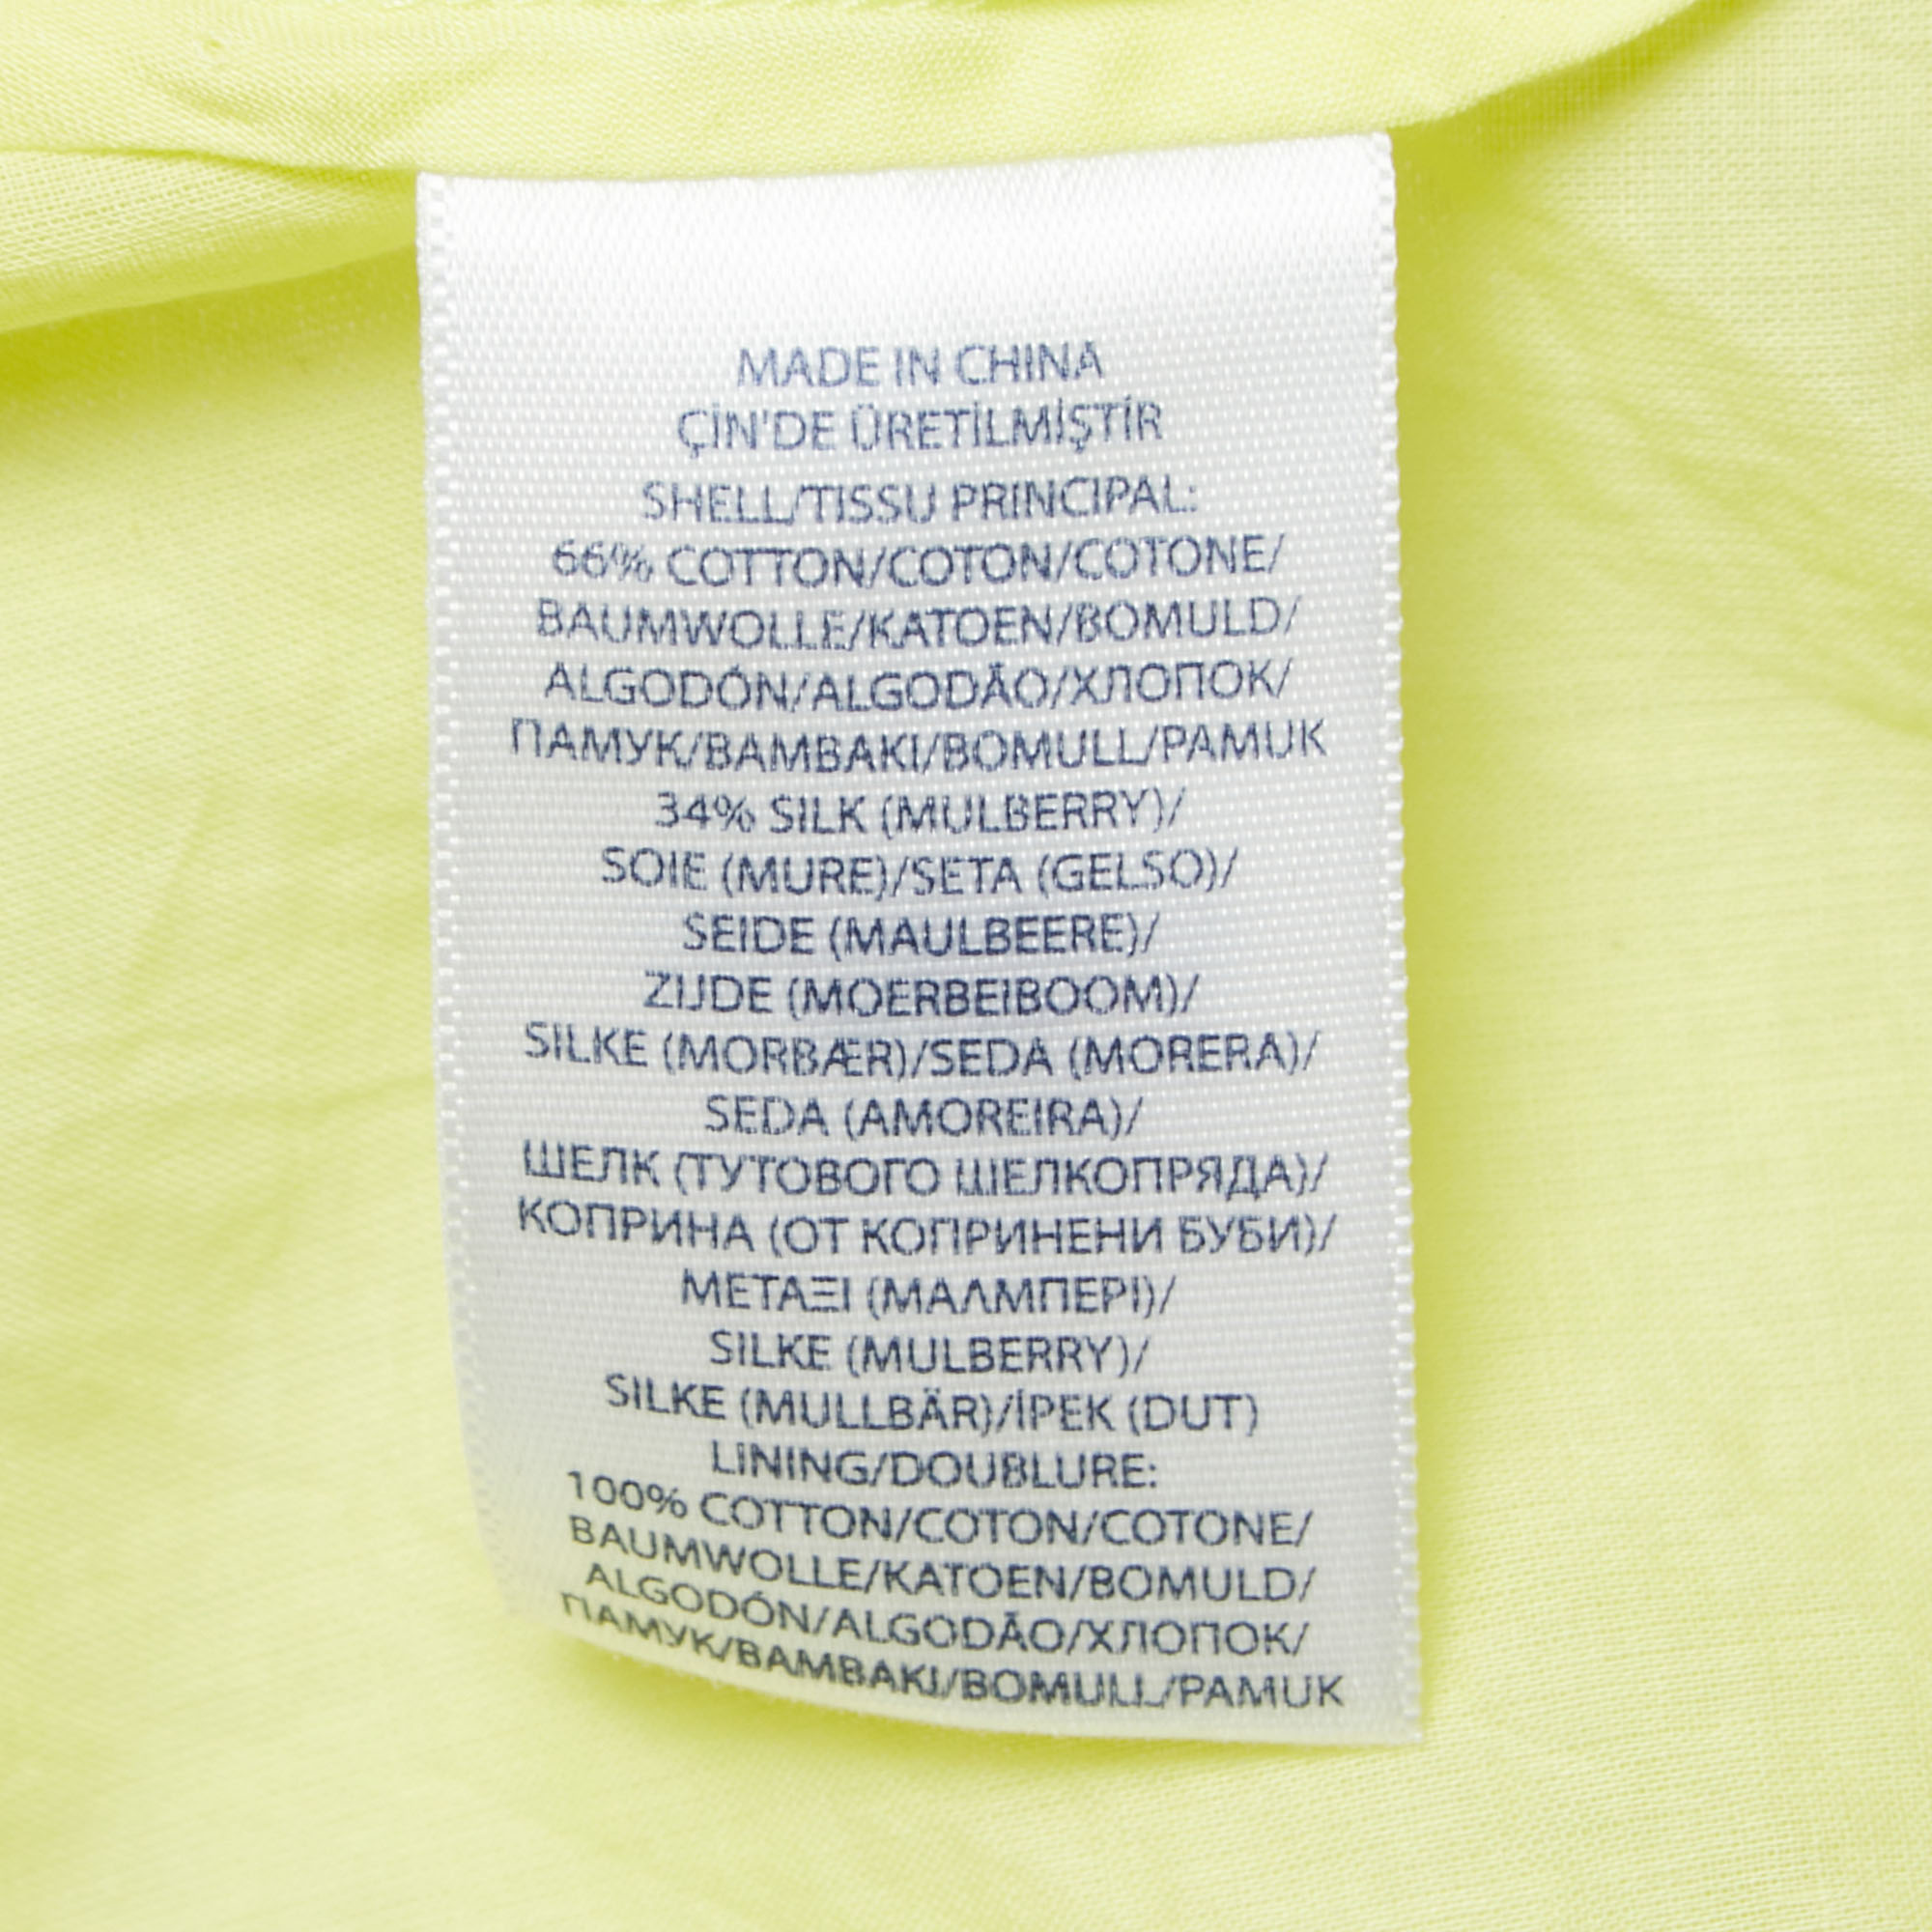 Polo Ralph Lauren Yellow Cotton Blend Strappy Flared Midi Dress L